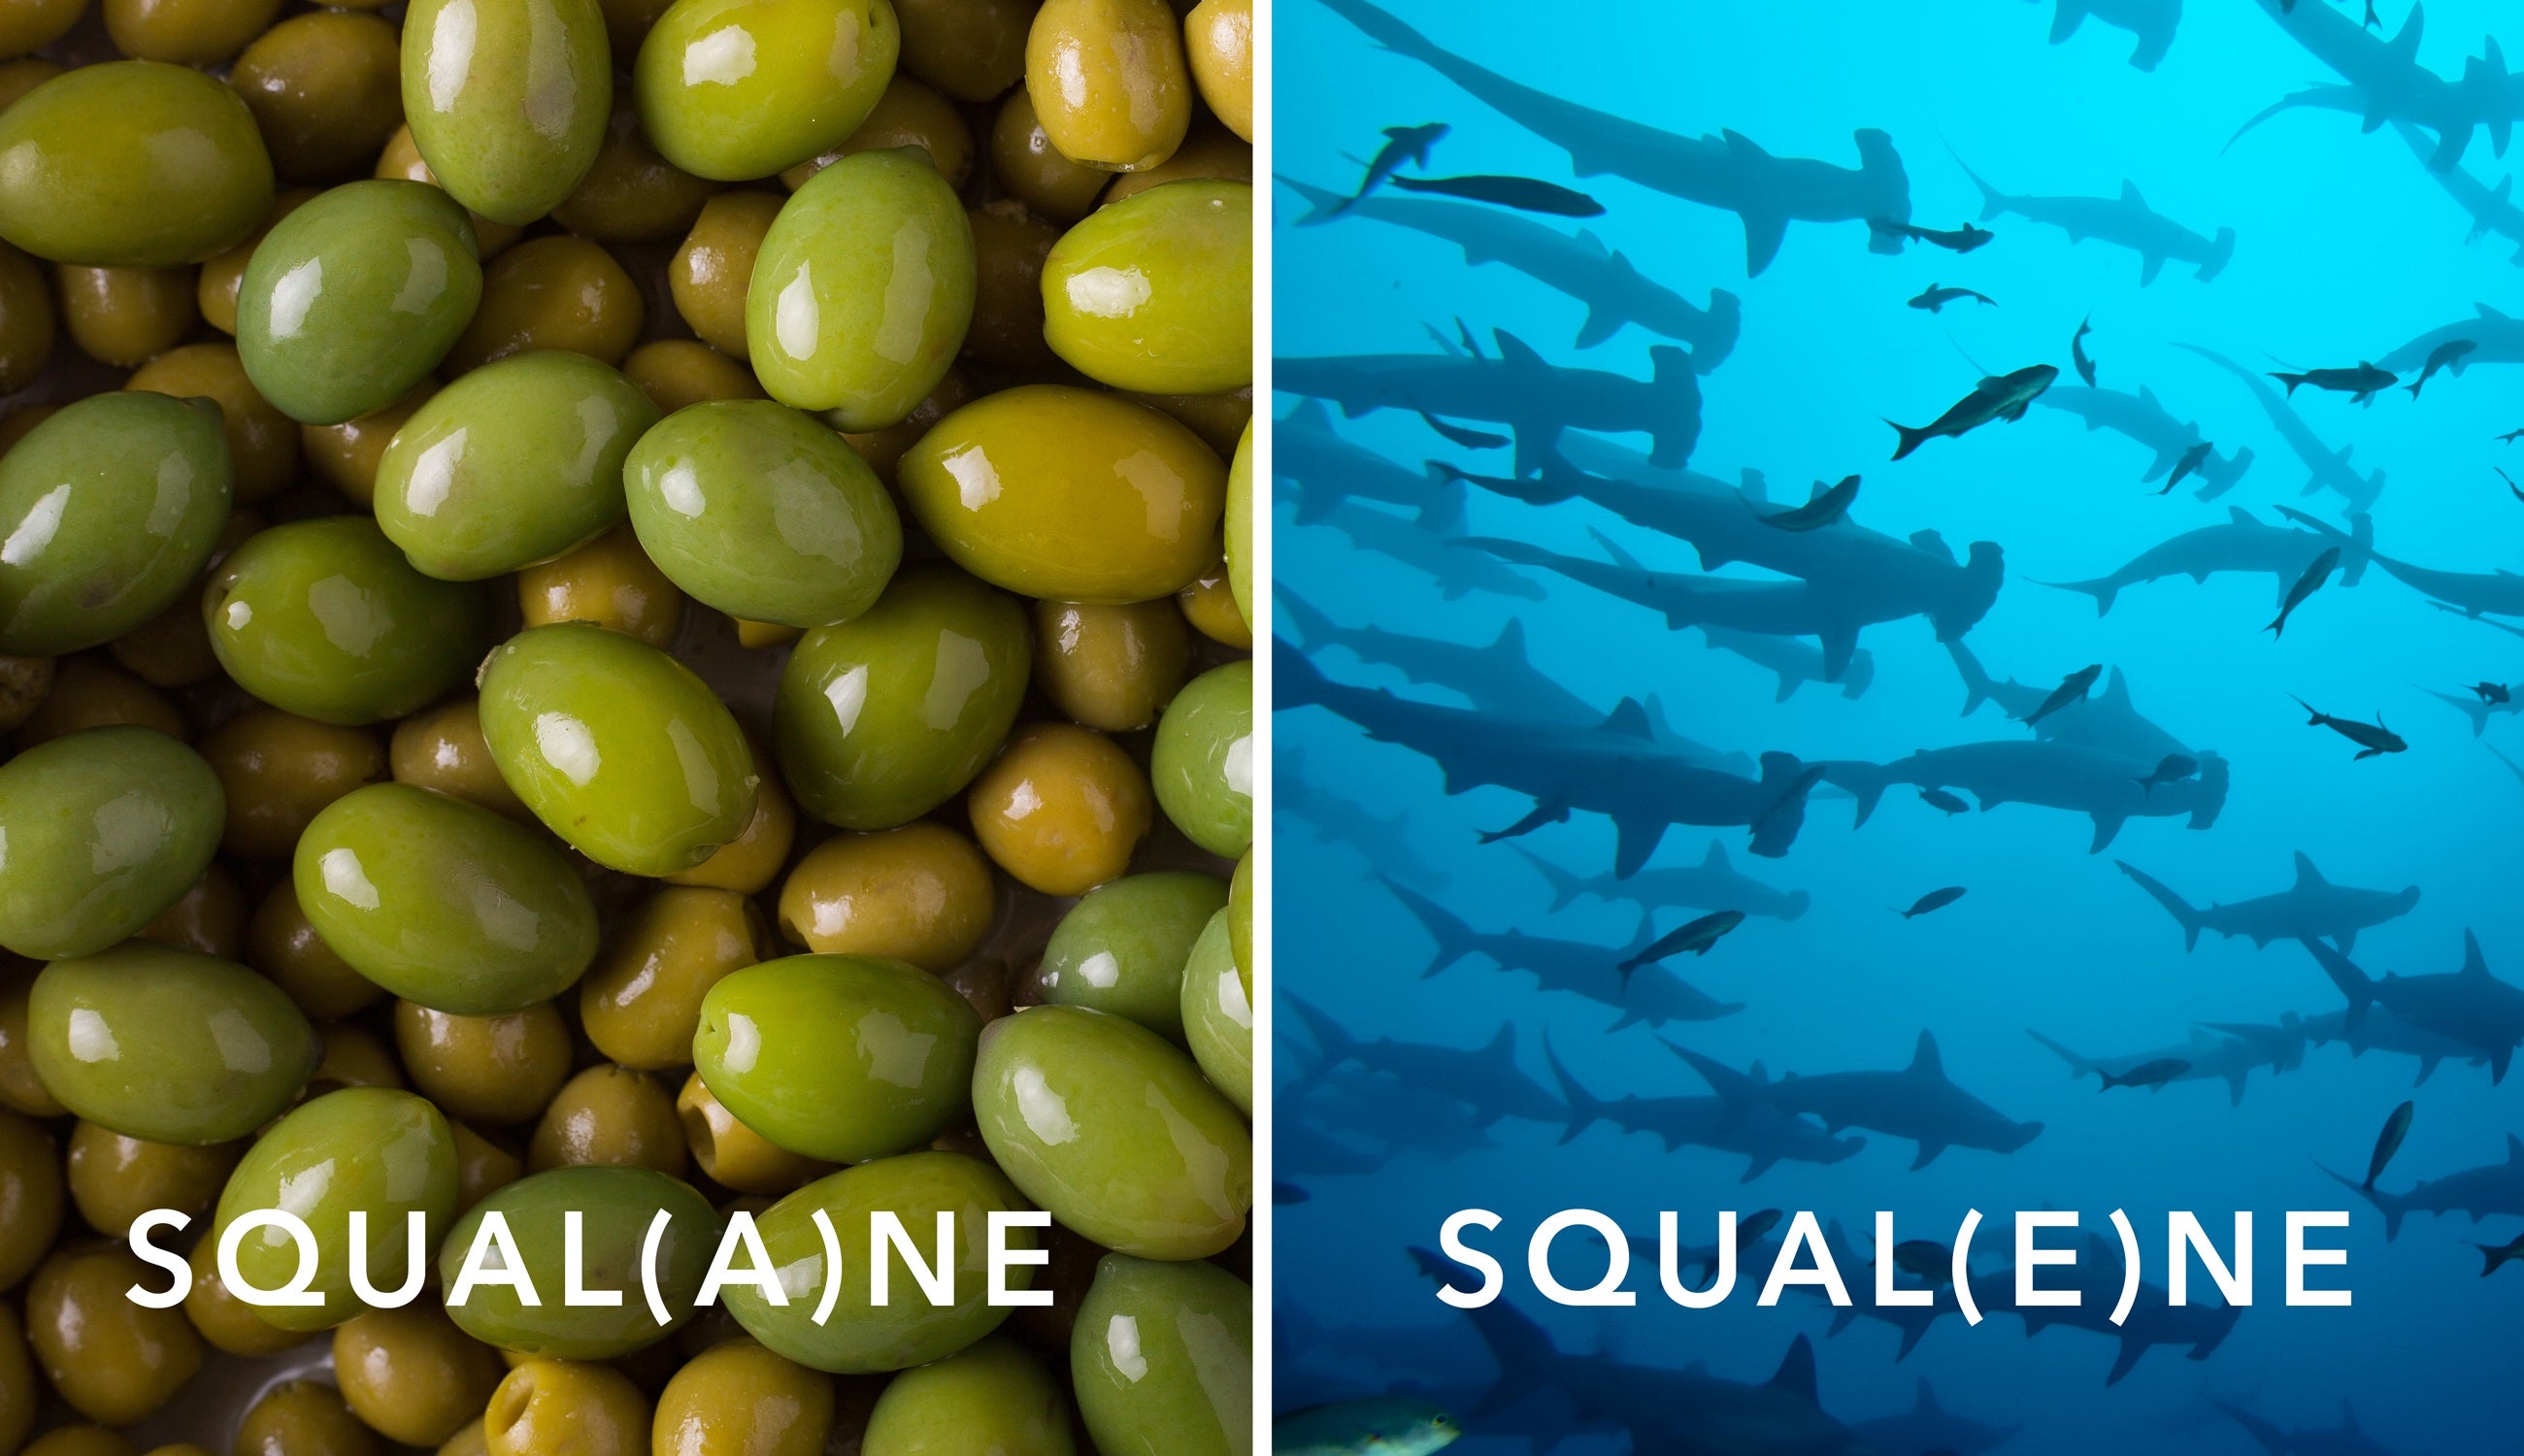 Olive and shark comparison image